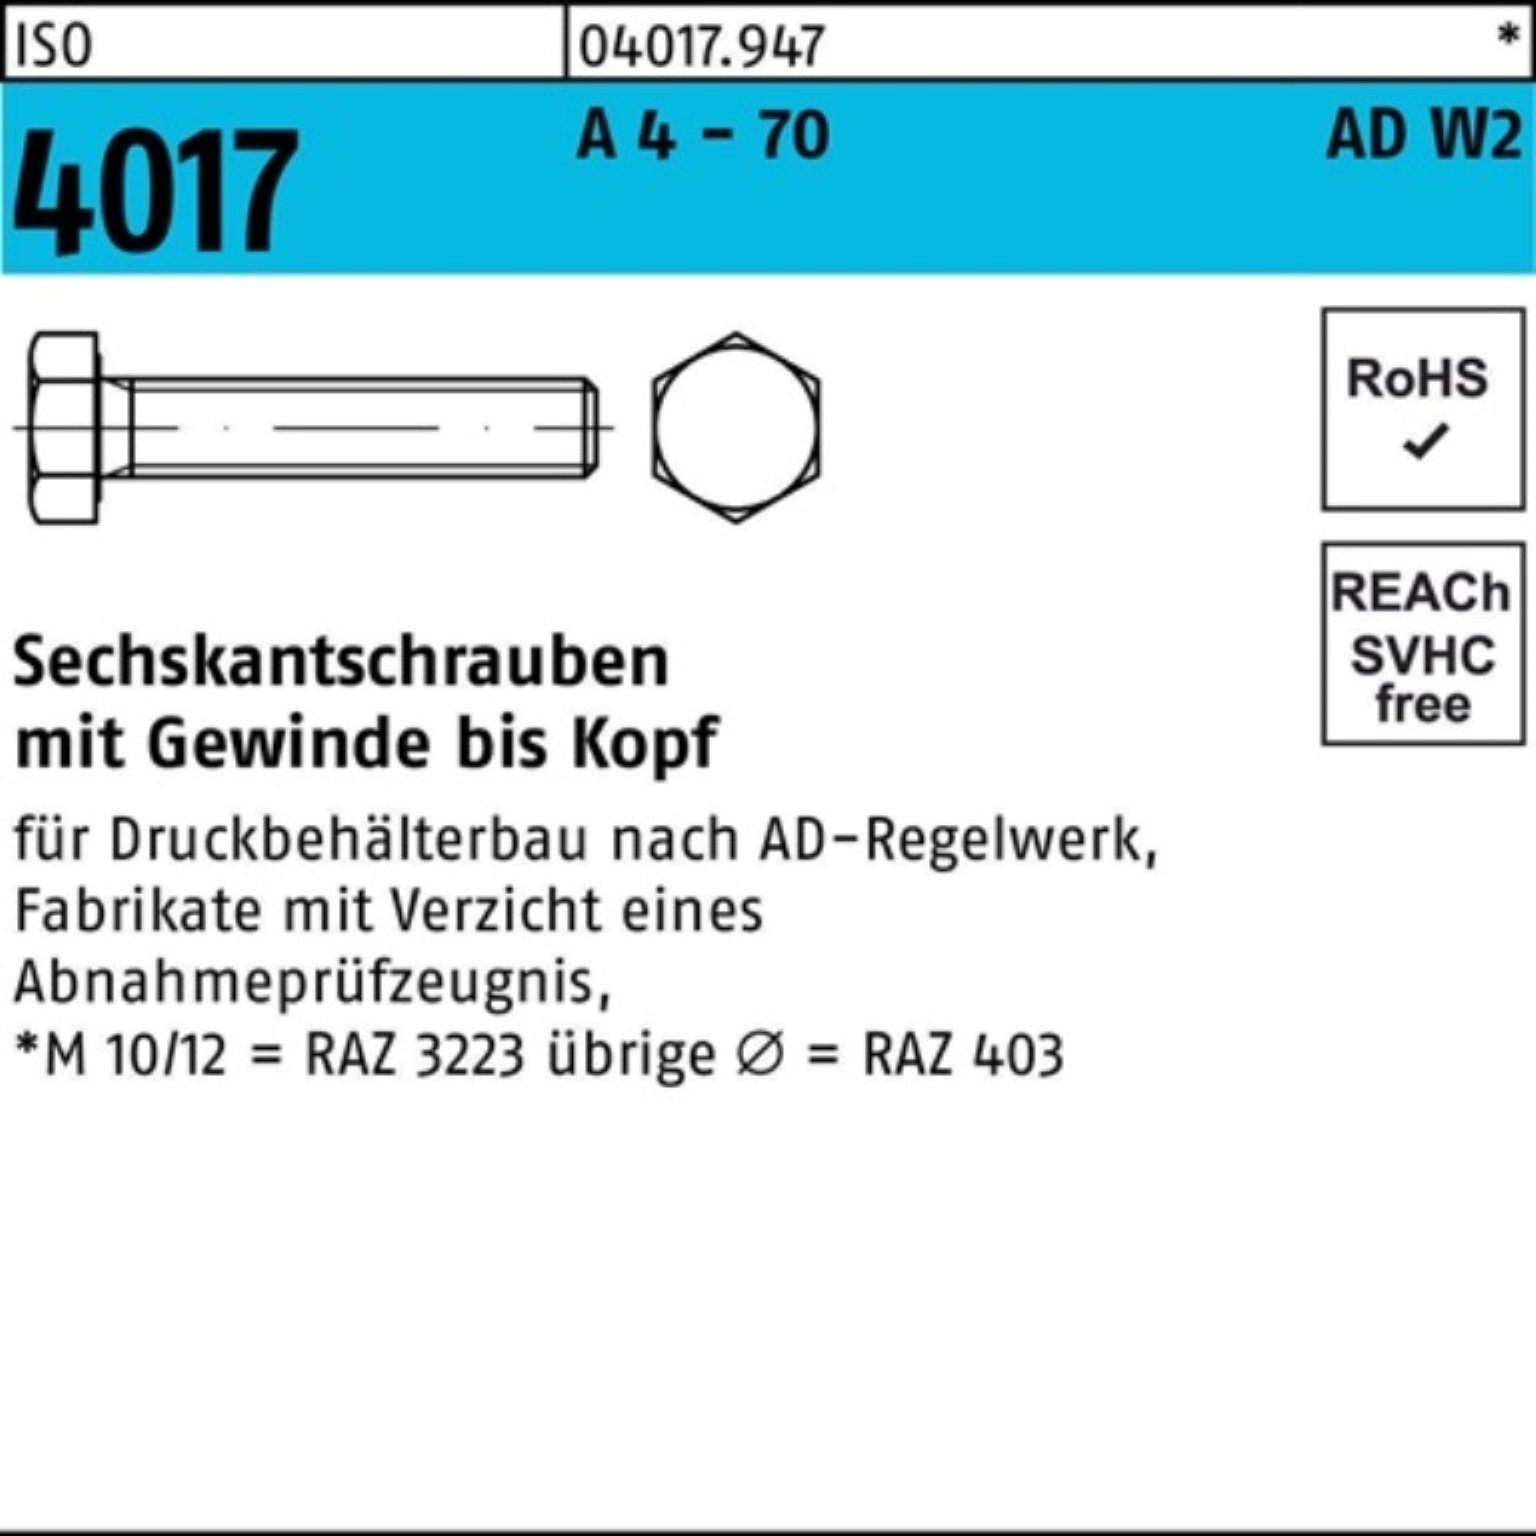 Bufab Sechskantschraube 100er Pack Sechskantschraube ISO 4017 VG M10x 60 A 4 - 70 AD-W2 100 St